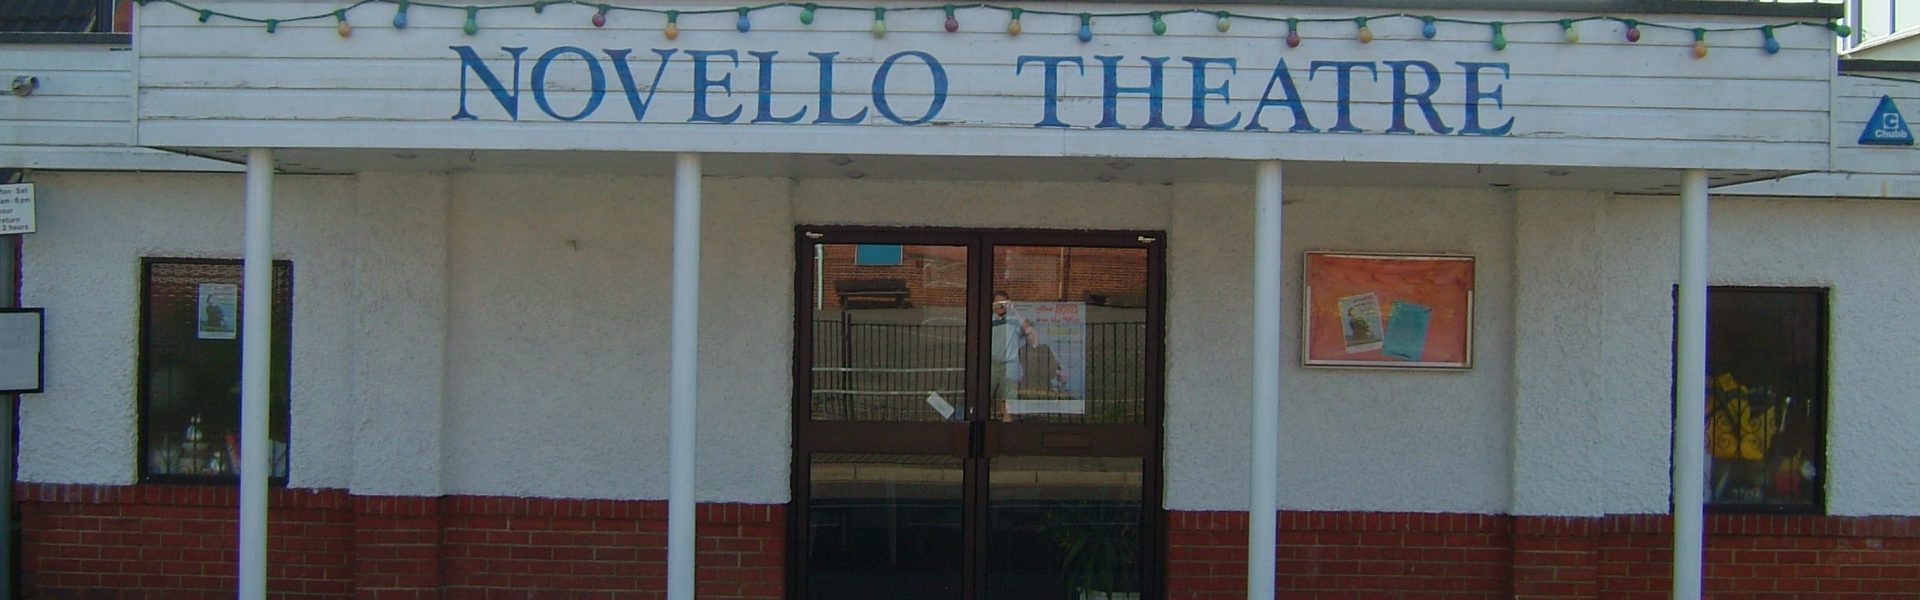 Image of the Novello theatre, Sunninghill